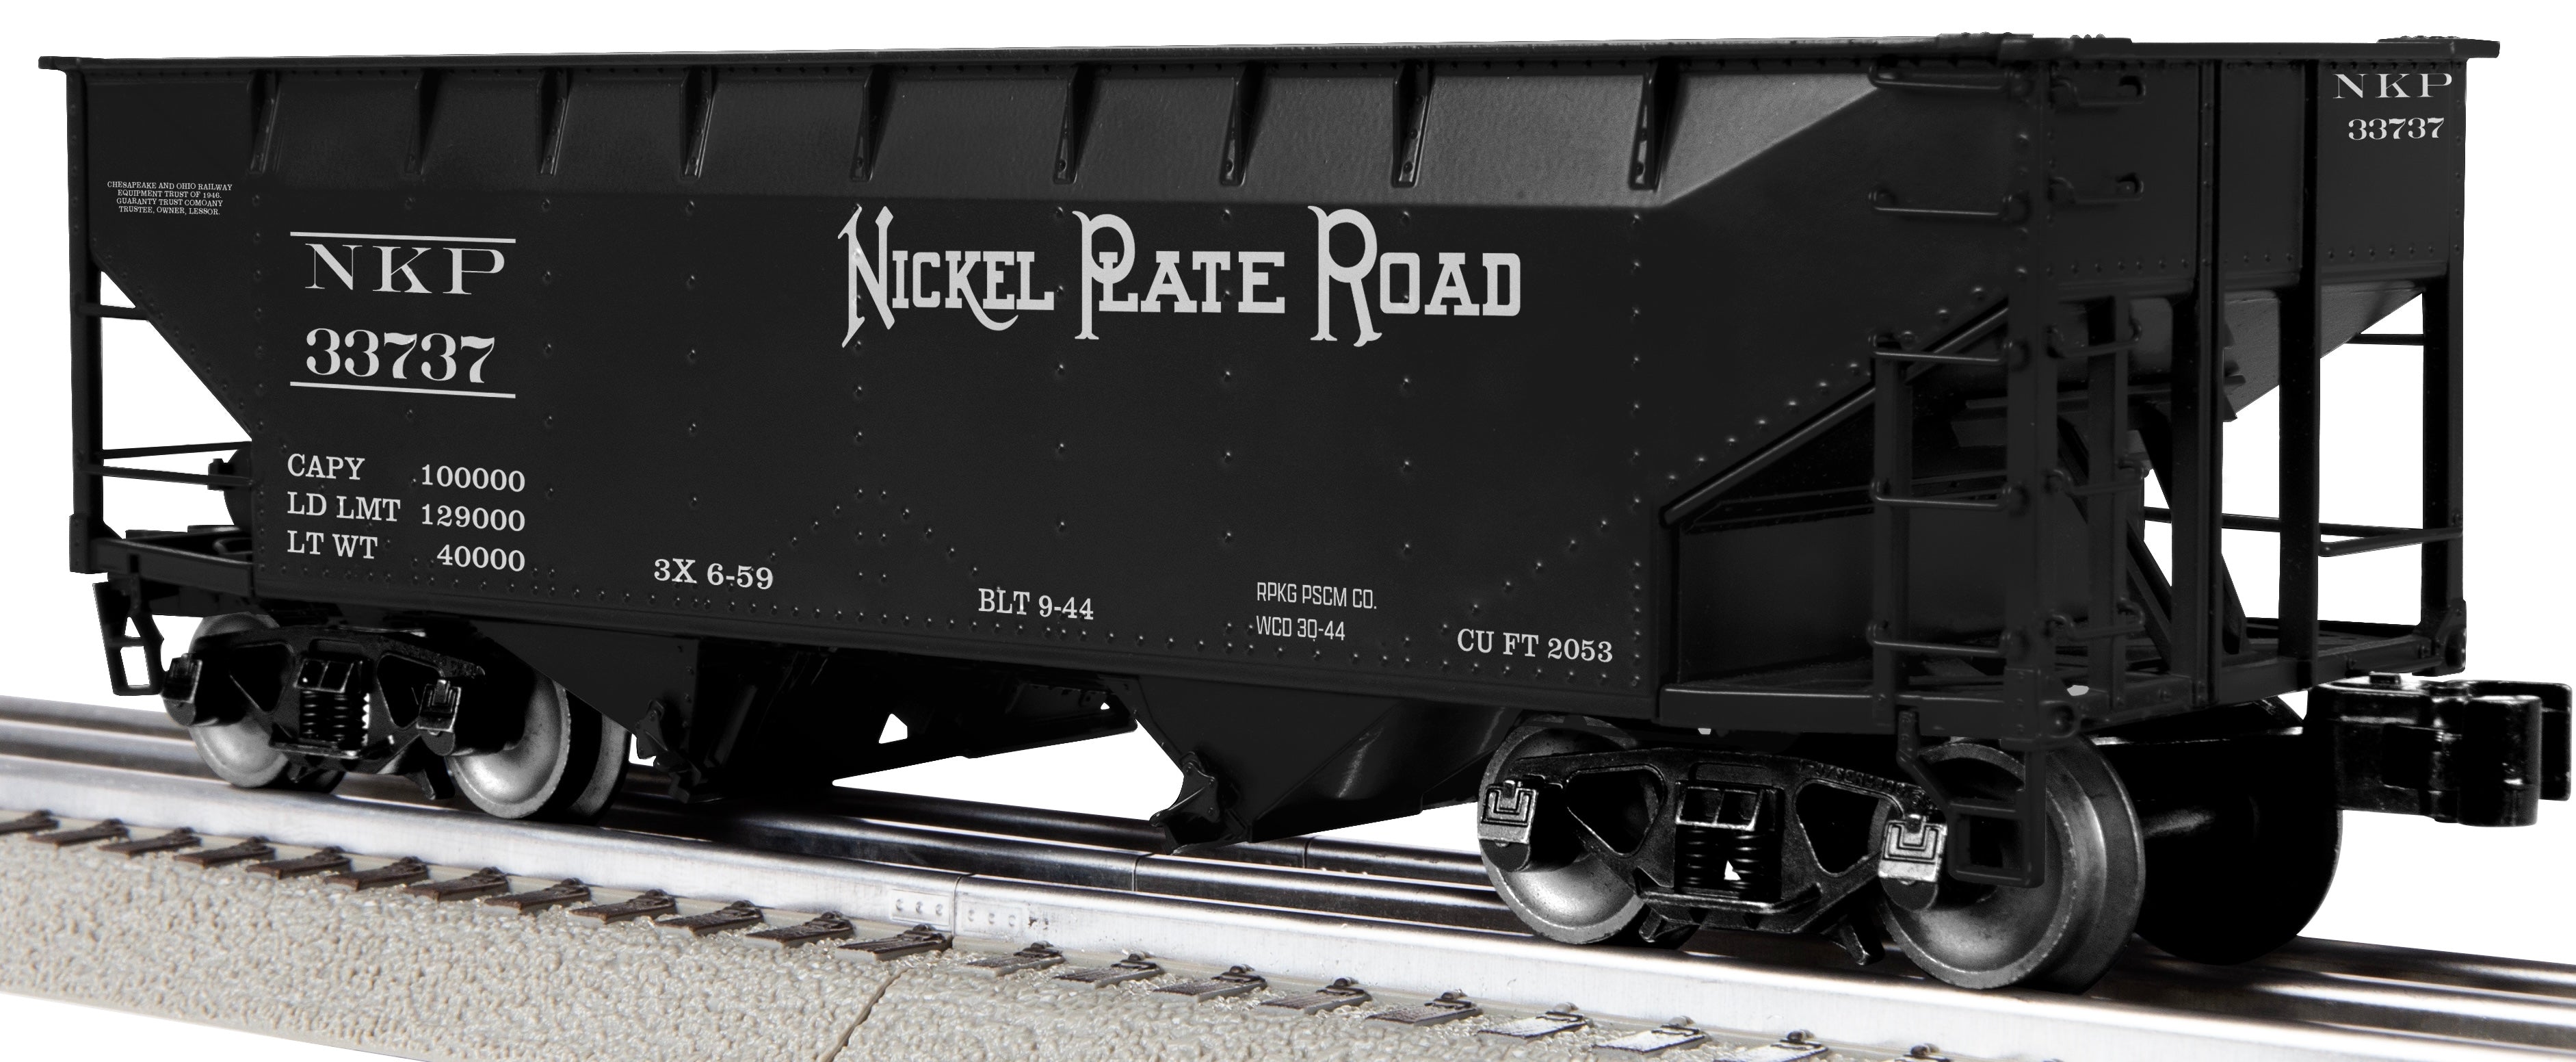 Lionel 2442329 - 2-Bay AAR Hopper Car "Nickel Plate Road" #33737